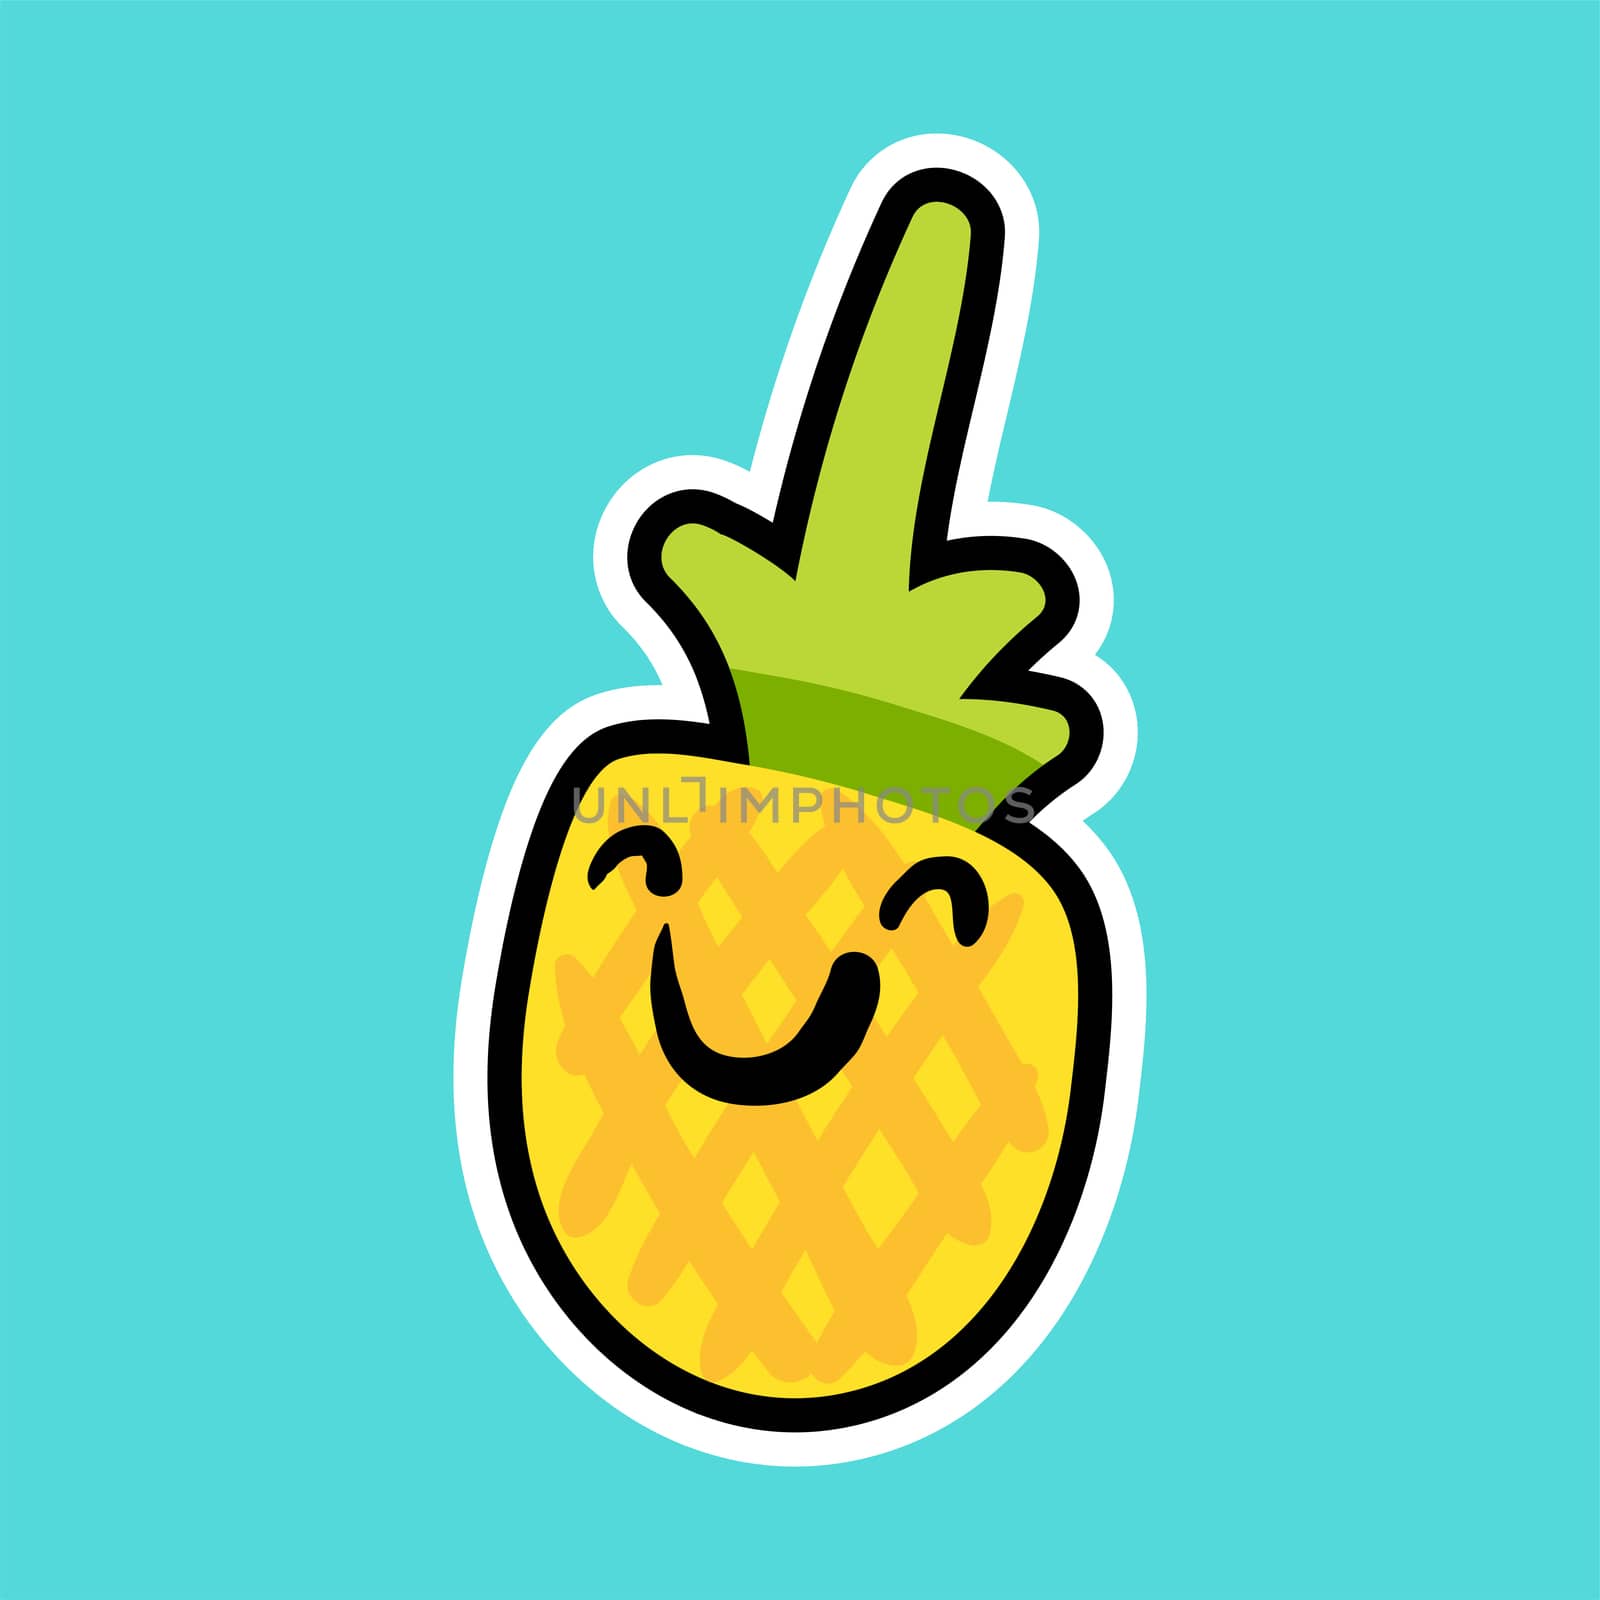 Pineapple cartoon sticker. by barsrsind